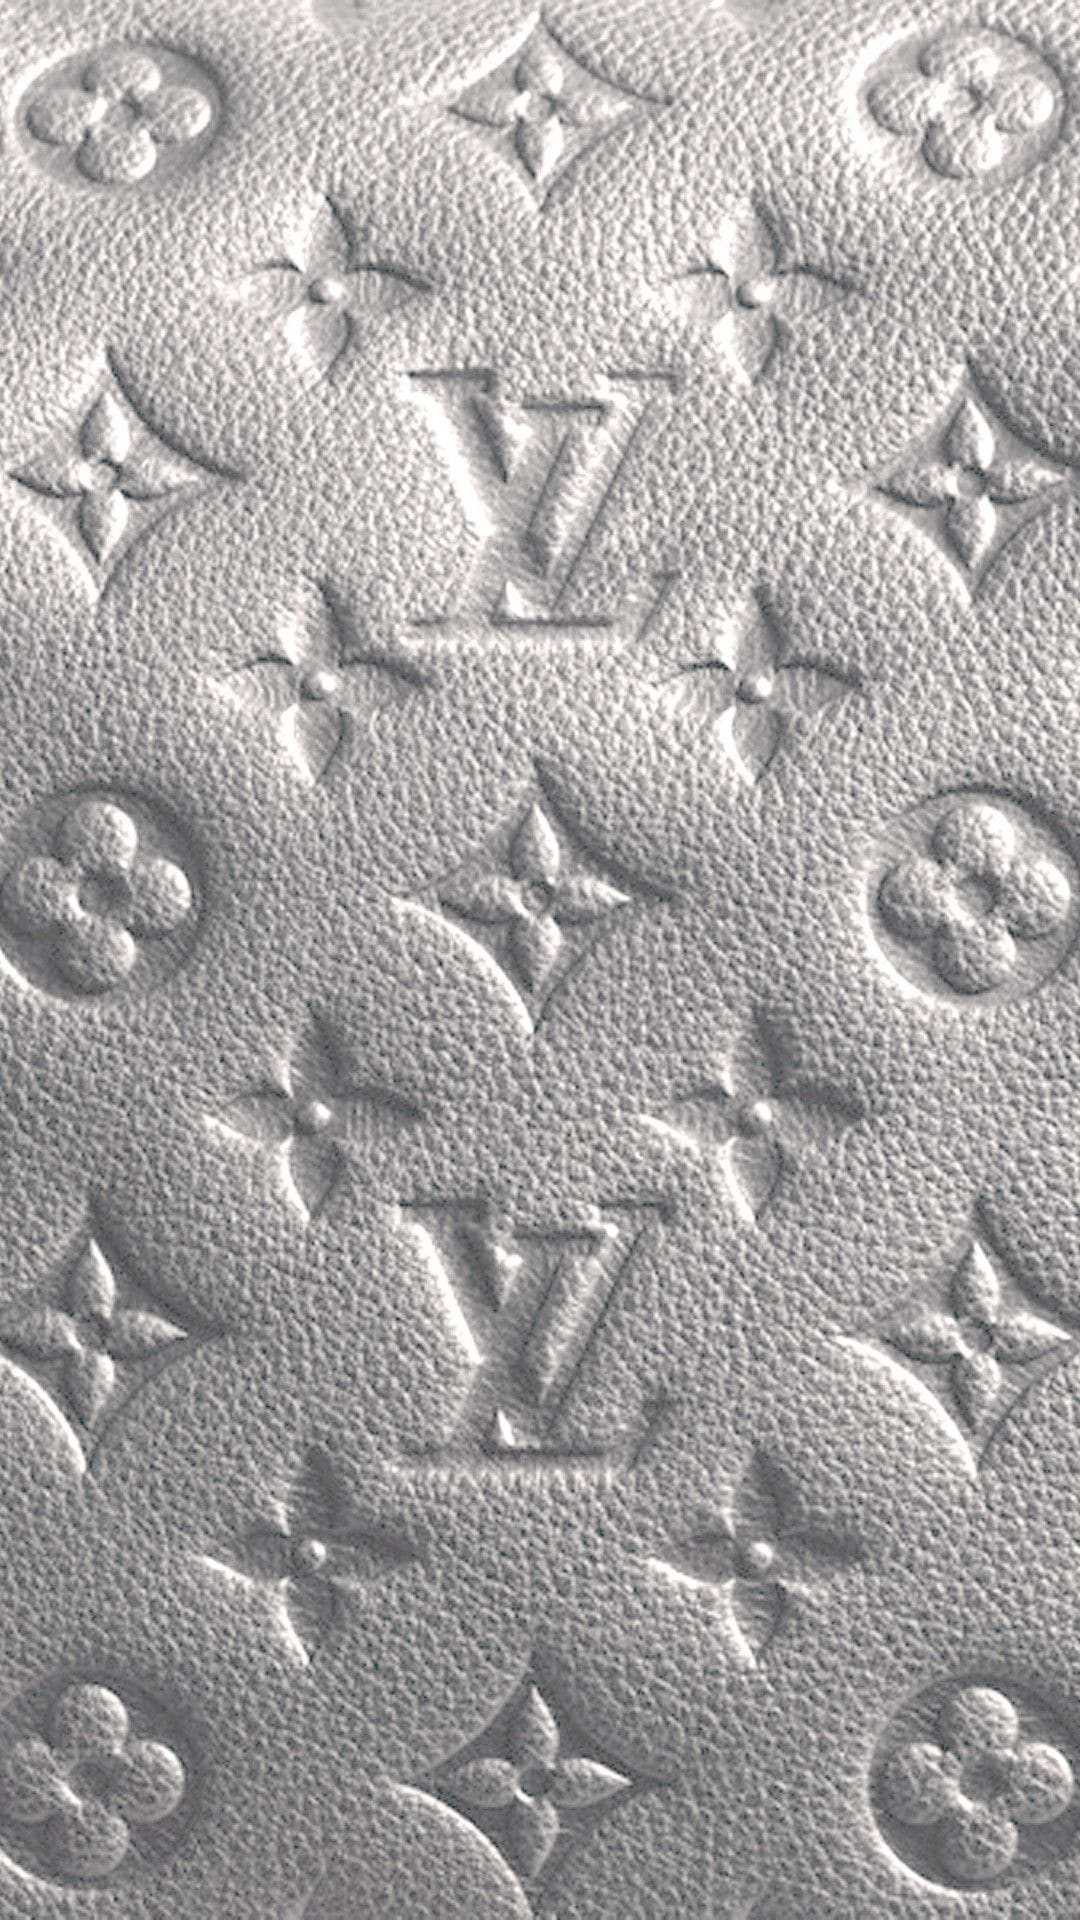 Louis Vuitton 4K Wallpapers